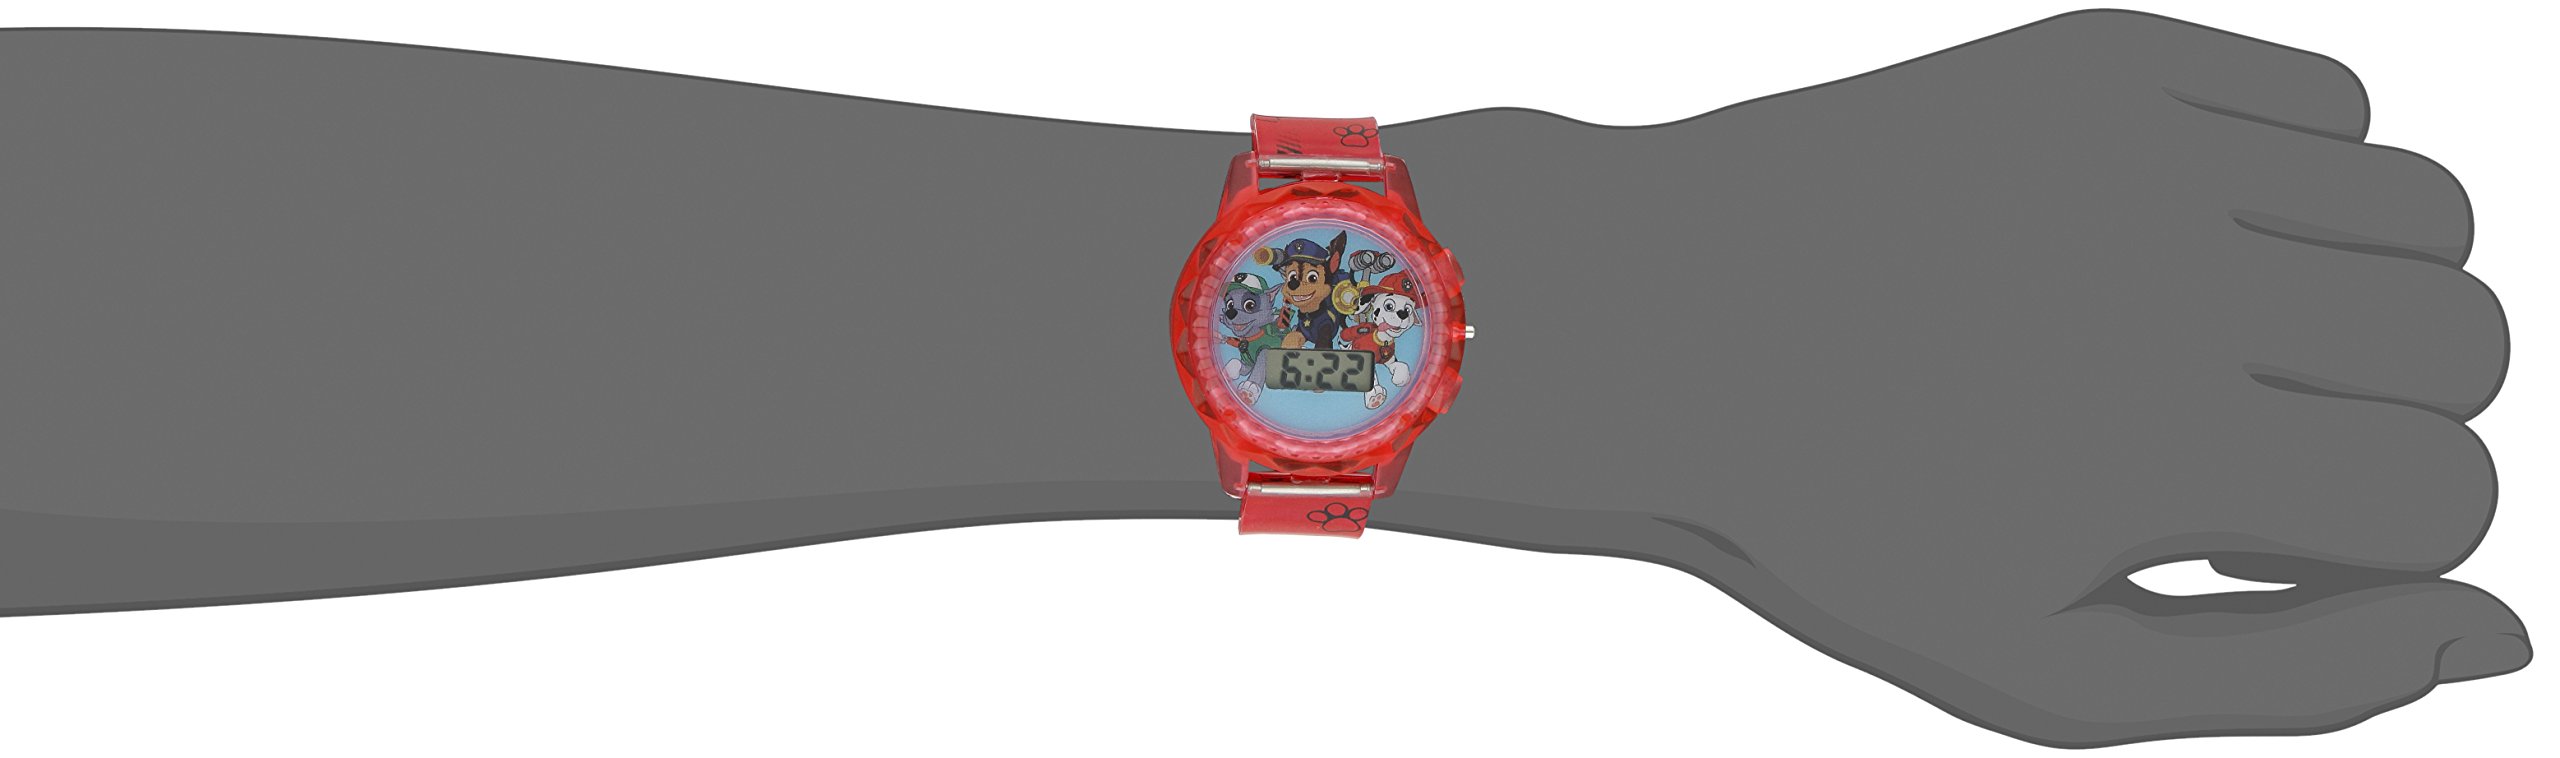 Nickelodeon Kids' PAW4006 Paw Patrol Digital Display Quartz Red Watch